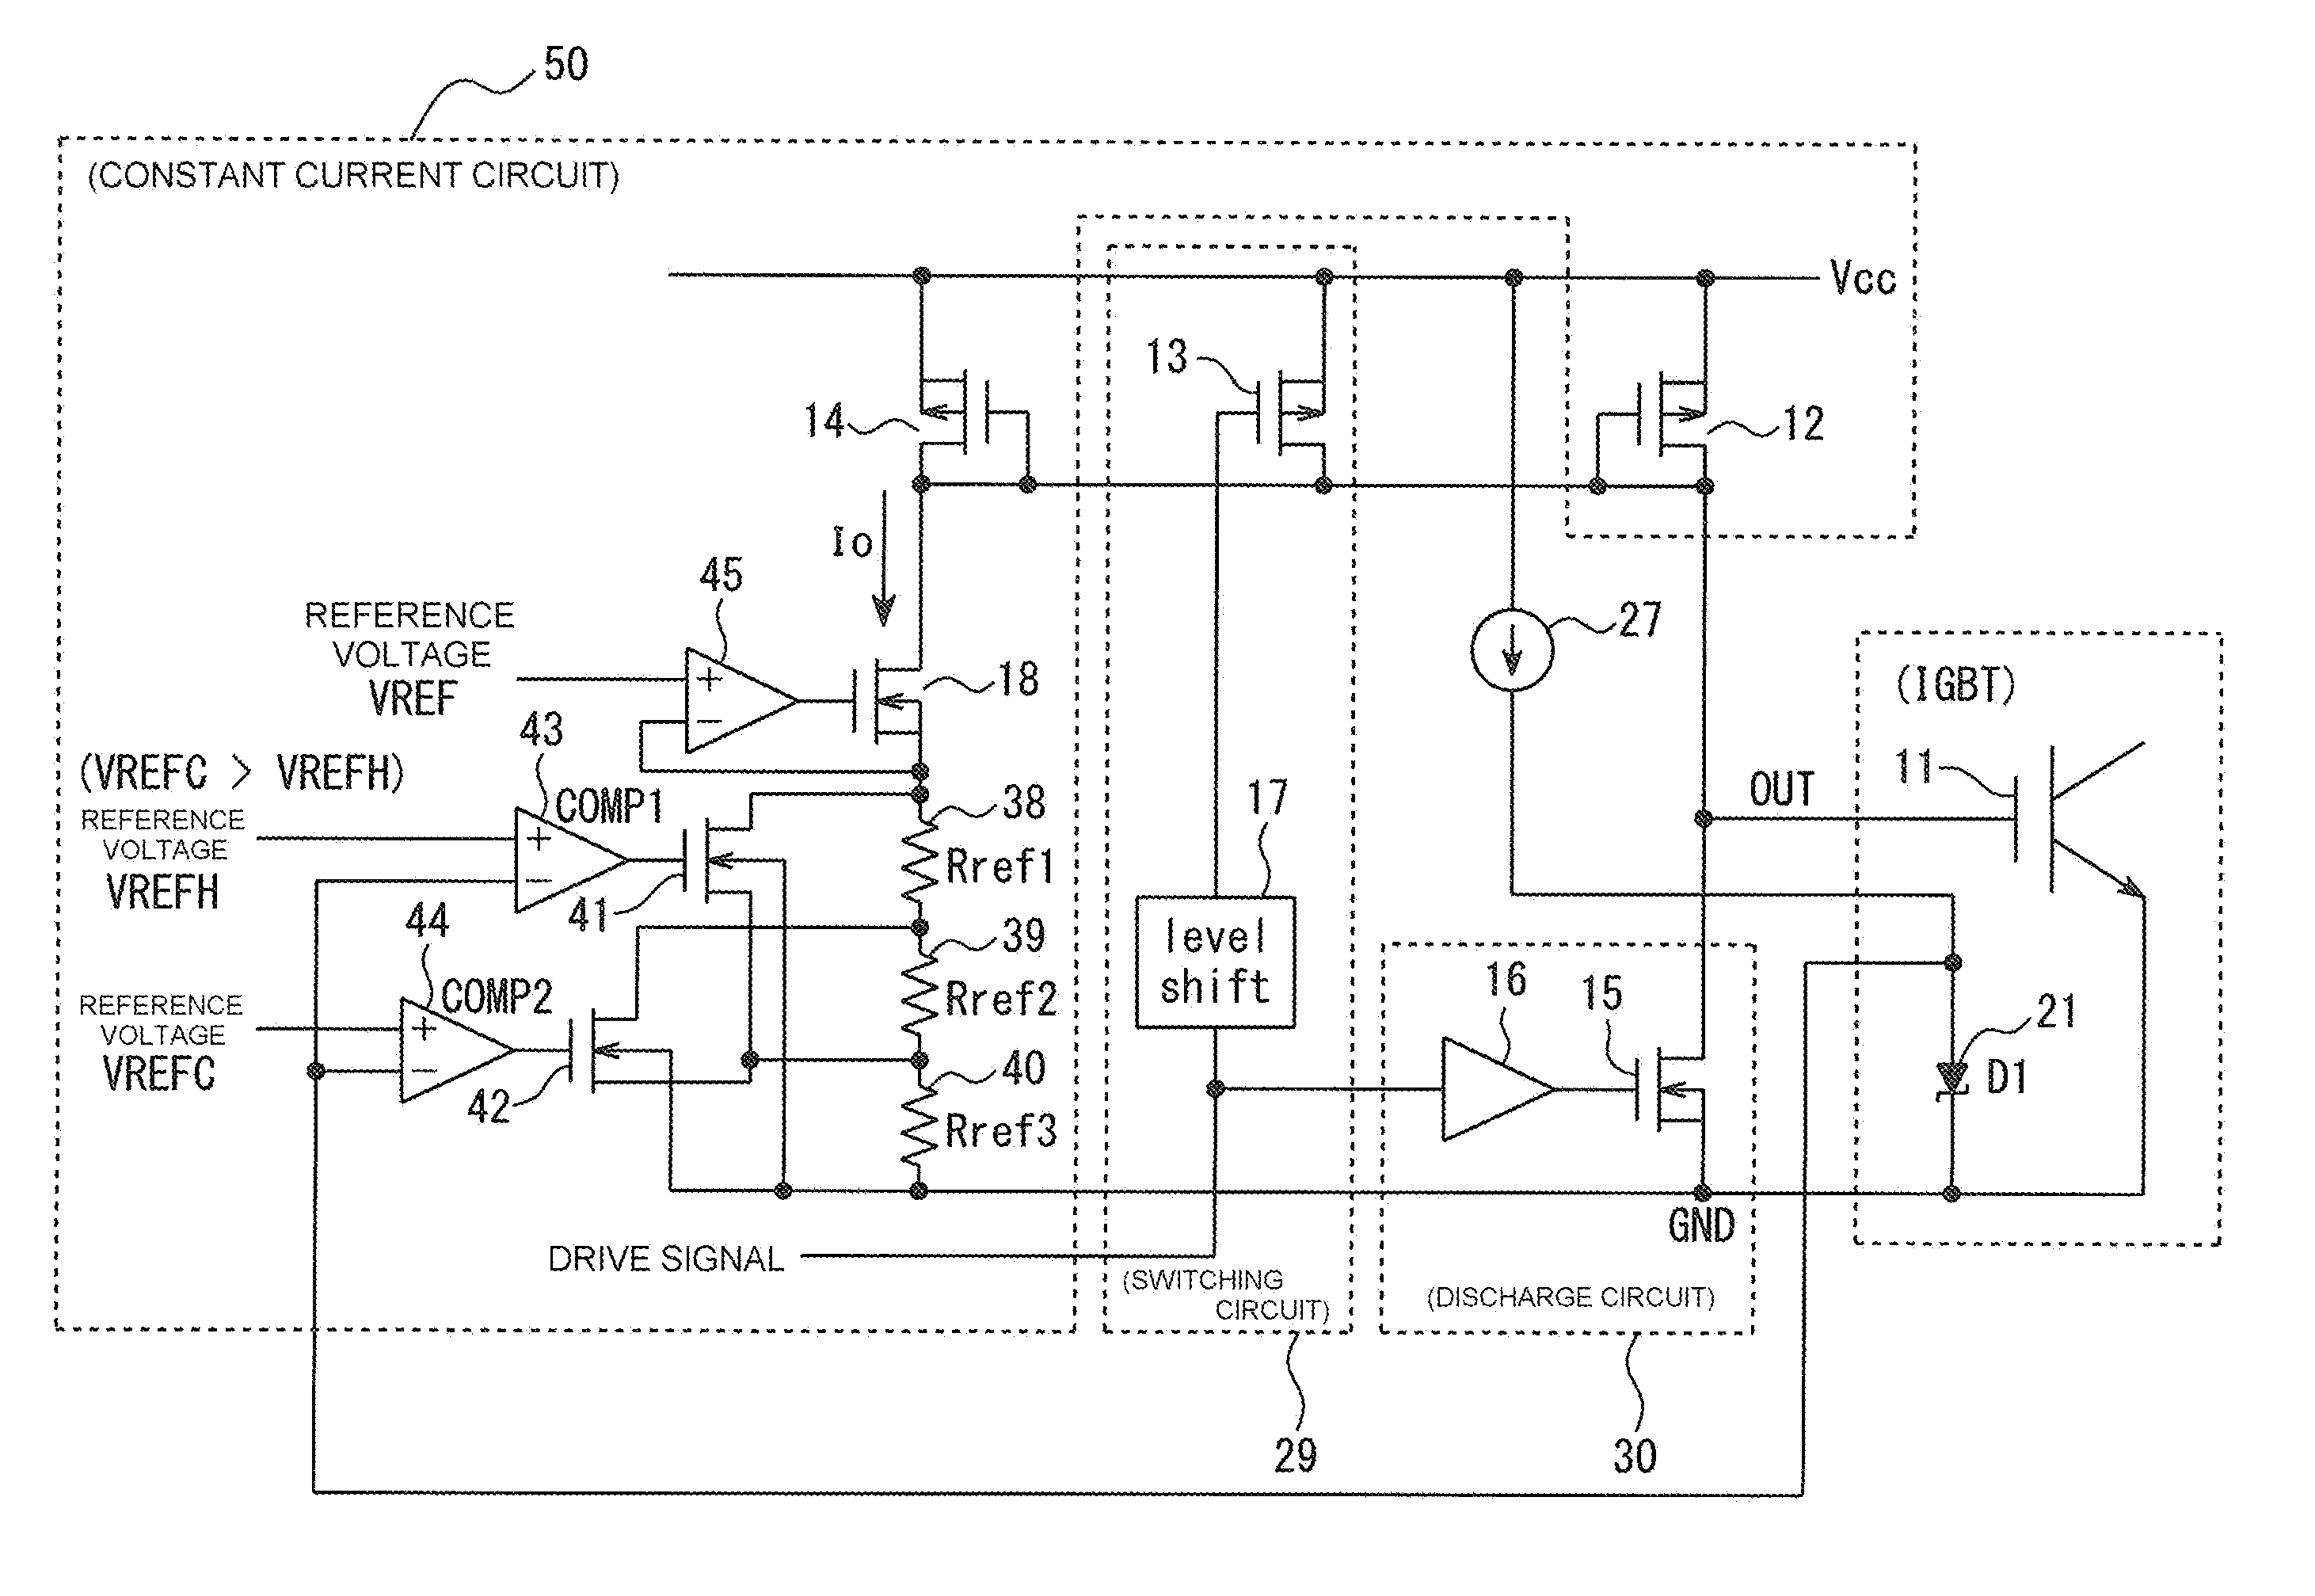 Power transistor drive circuit